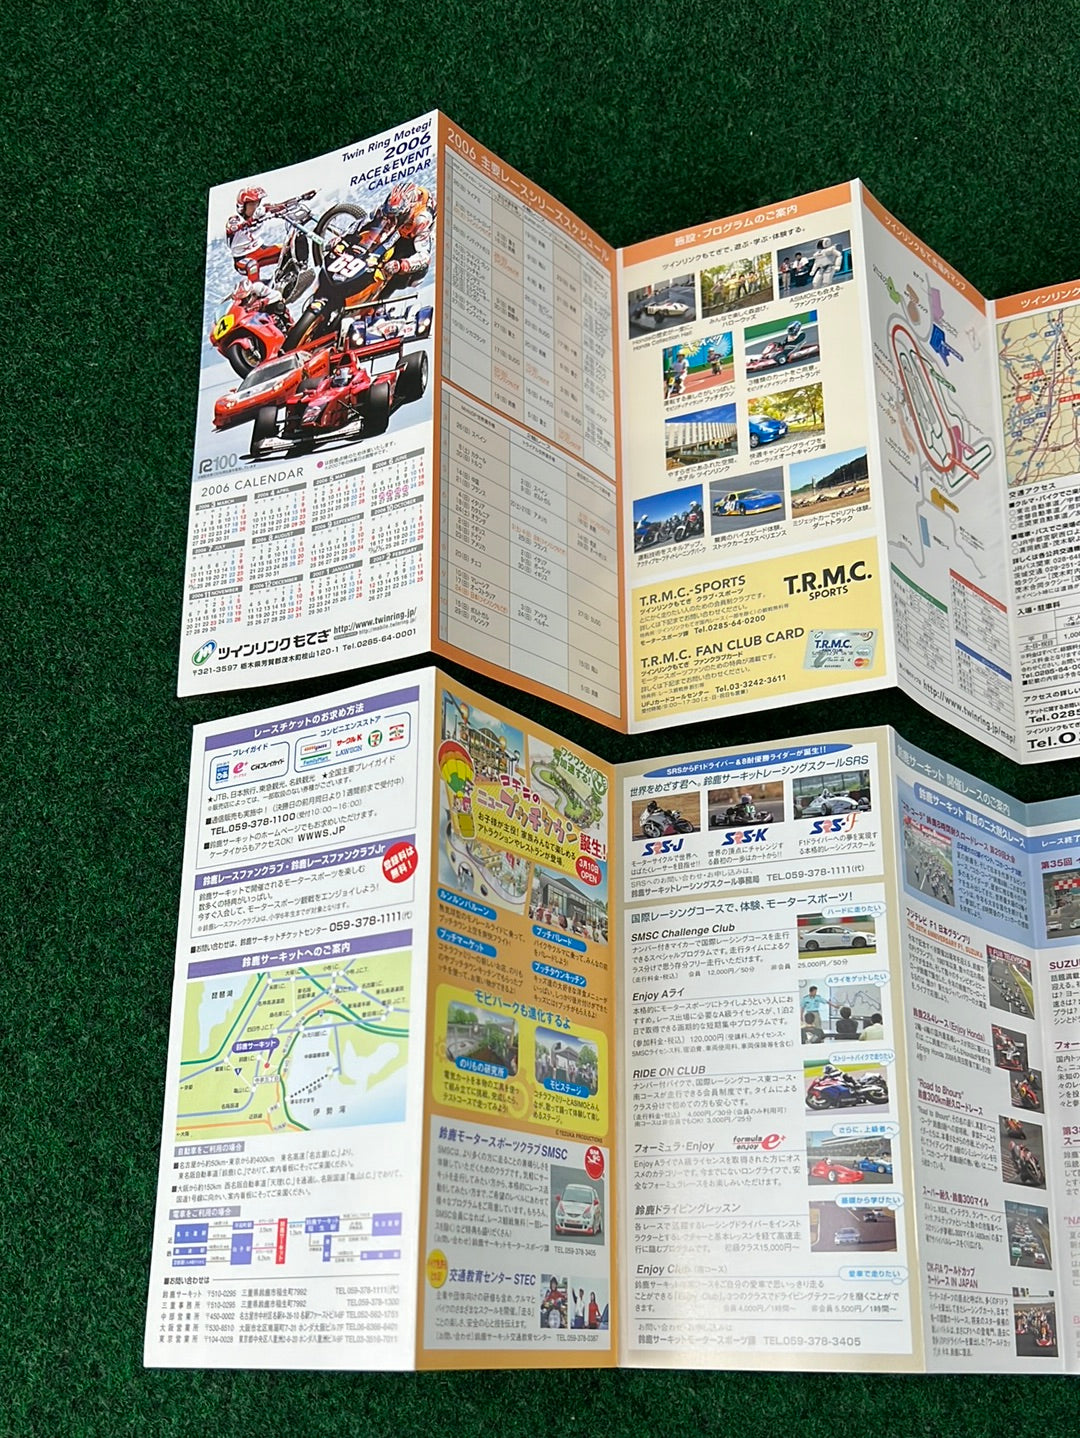 2006 Suzuka Circuit & Twin Ring Motegi Race & Event Calendar Set